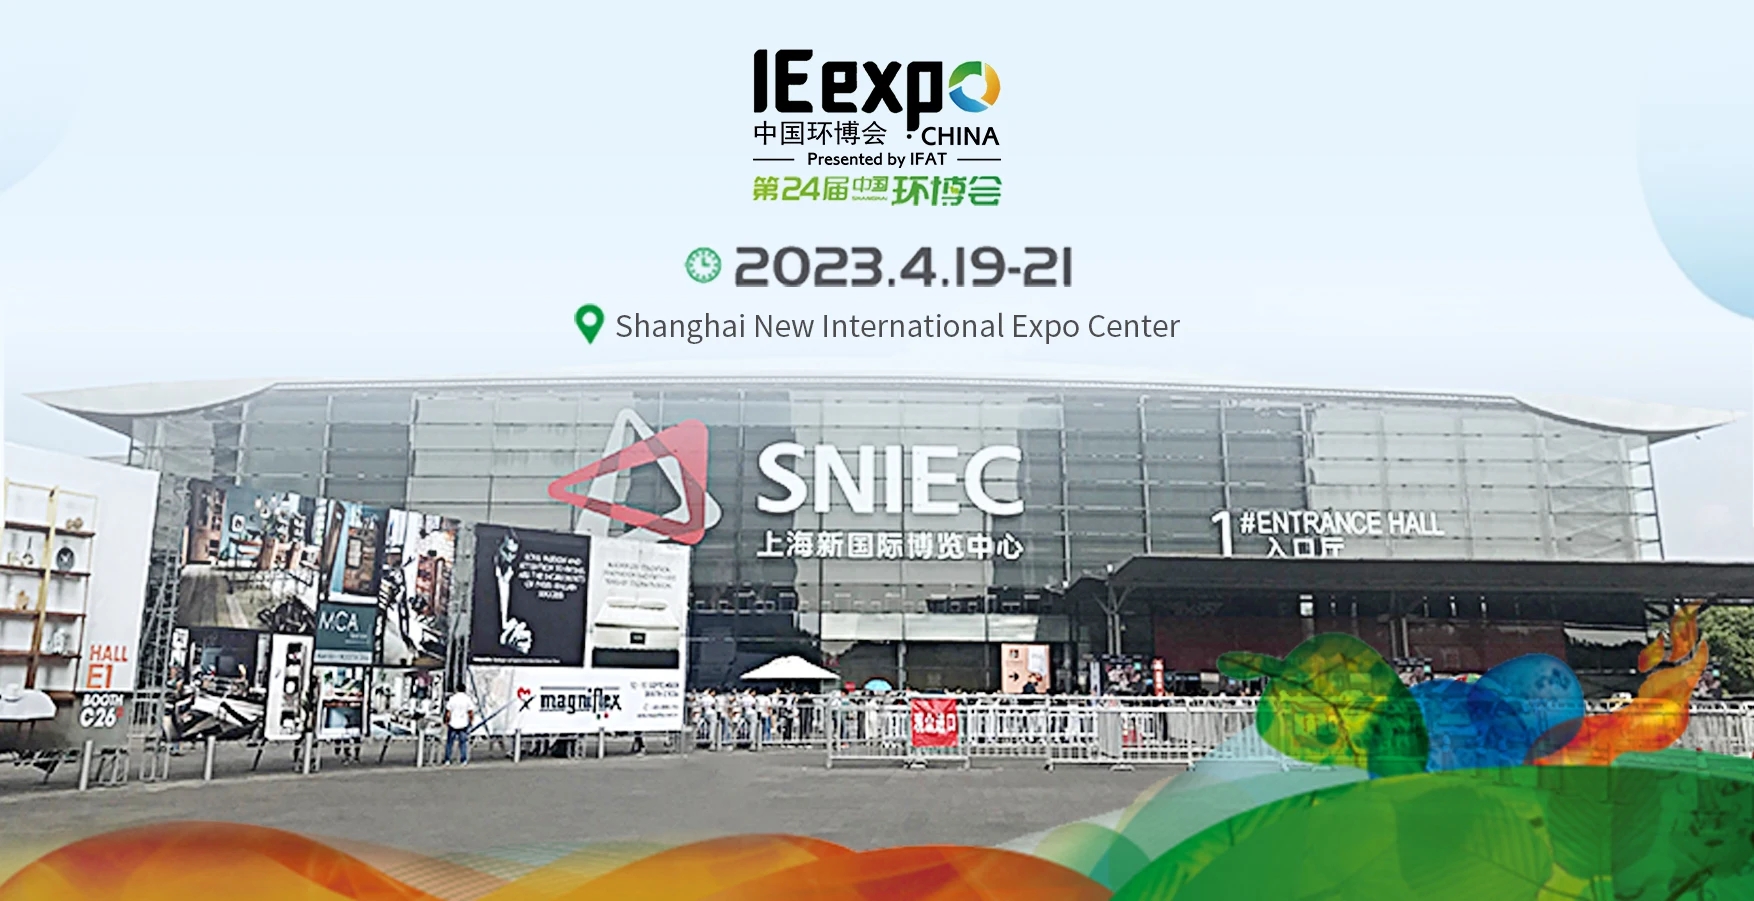 IE Expo China 2023